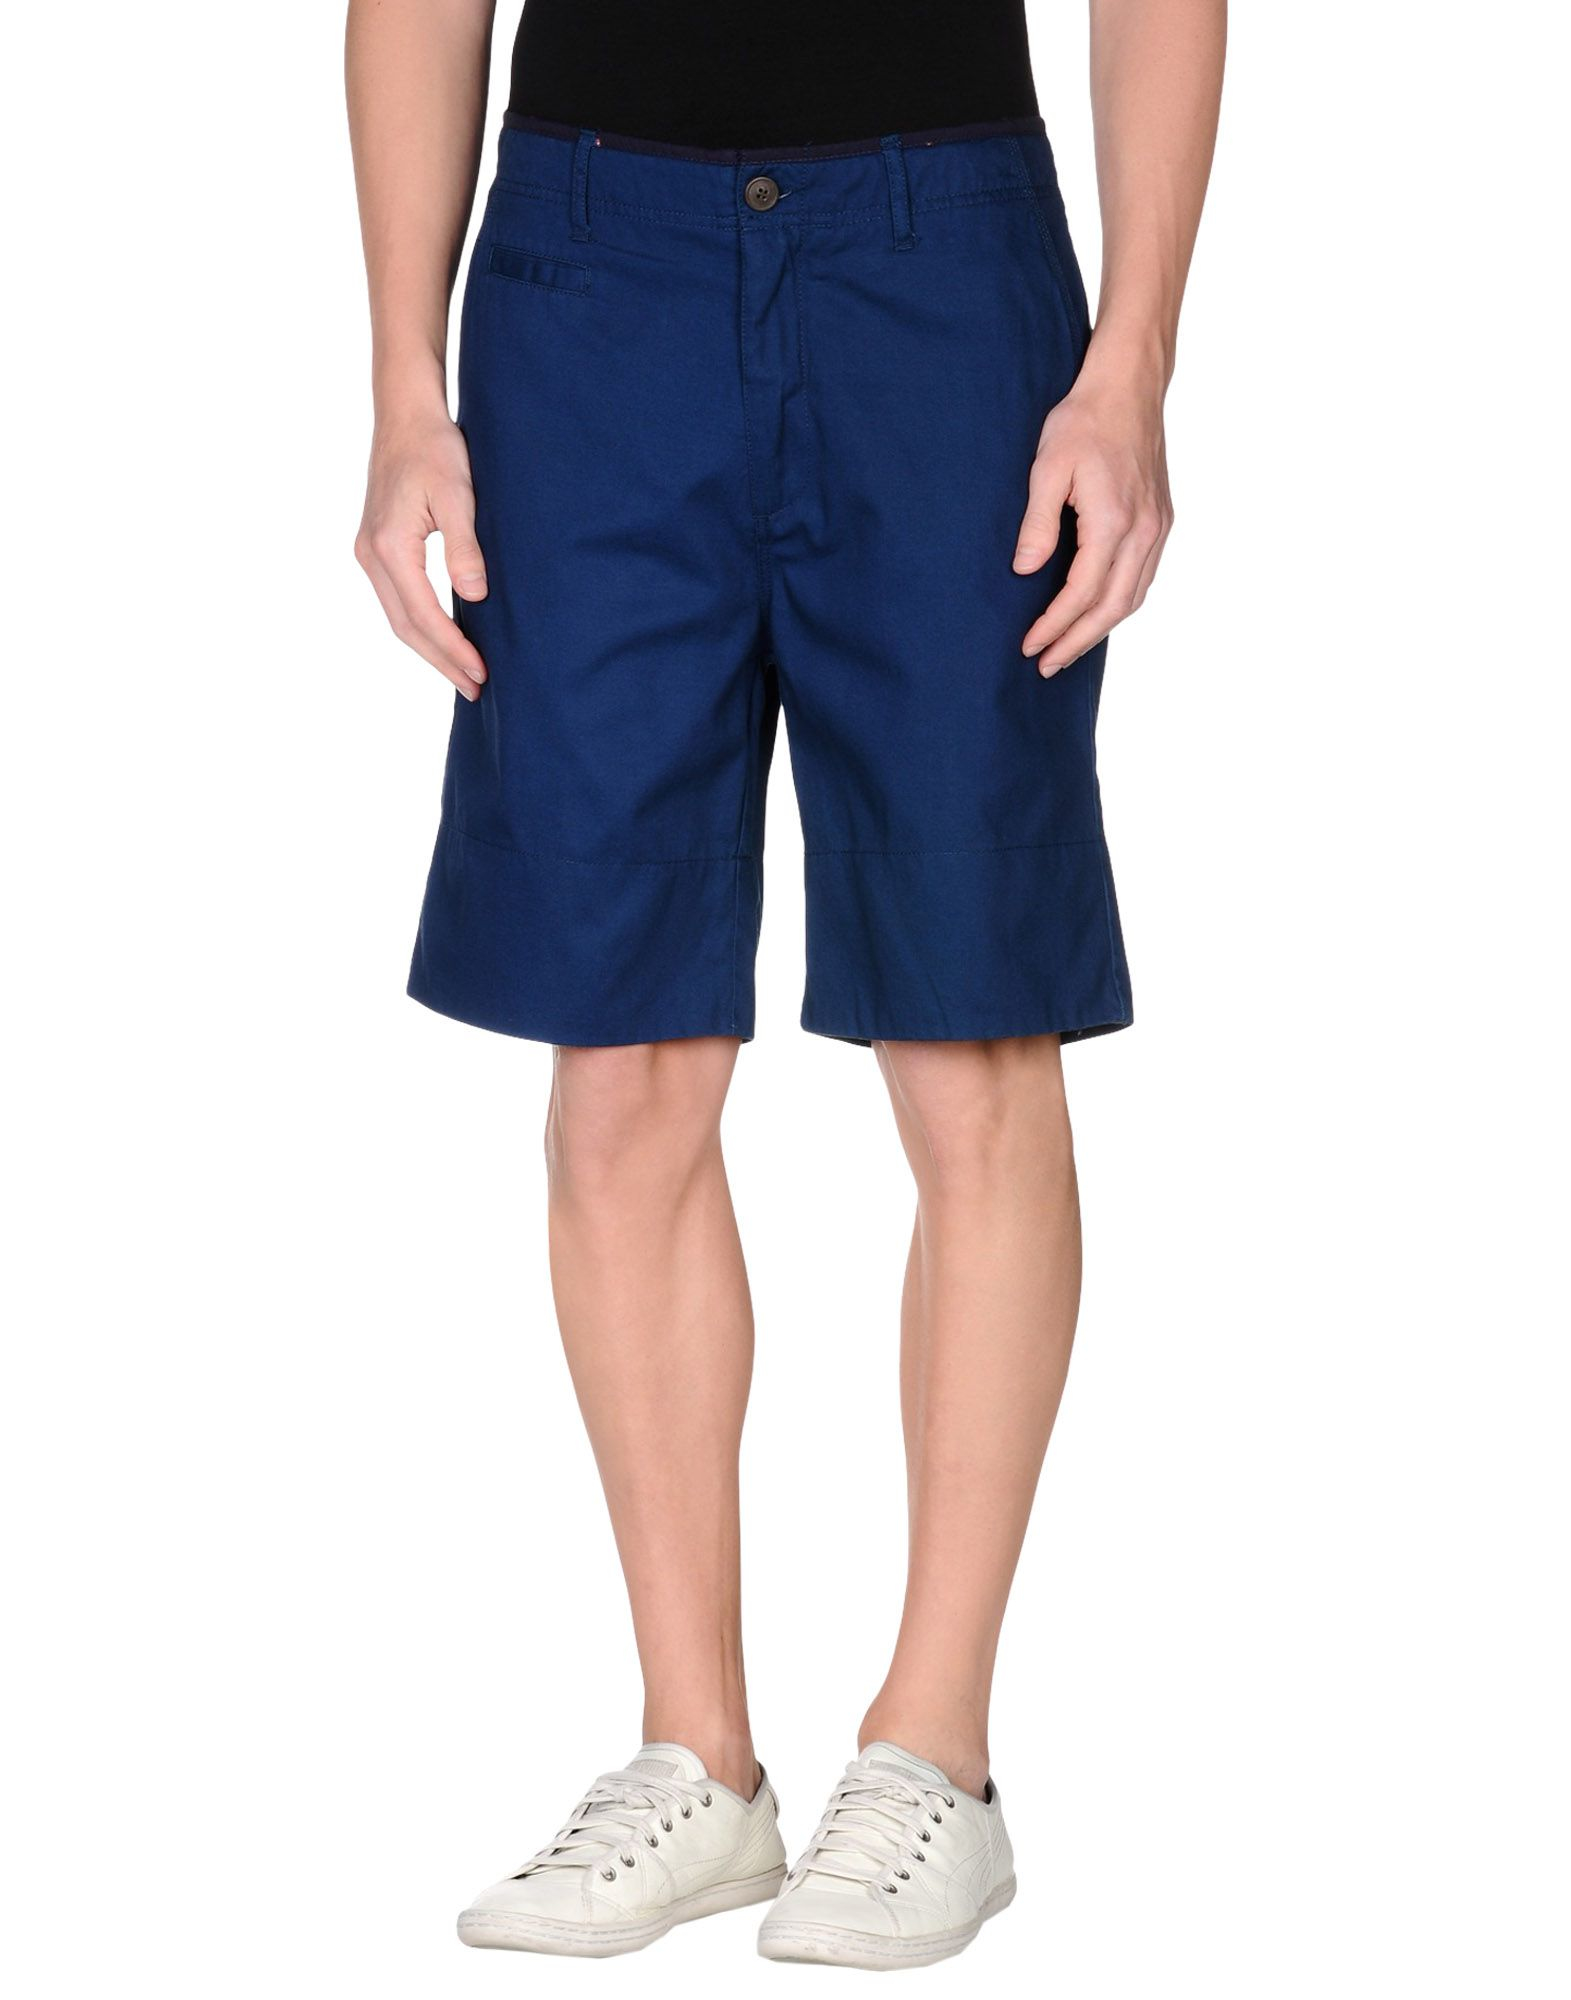 Lyst - Suit Bermuda Shorts in Blue for Men